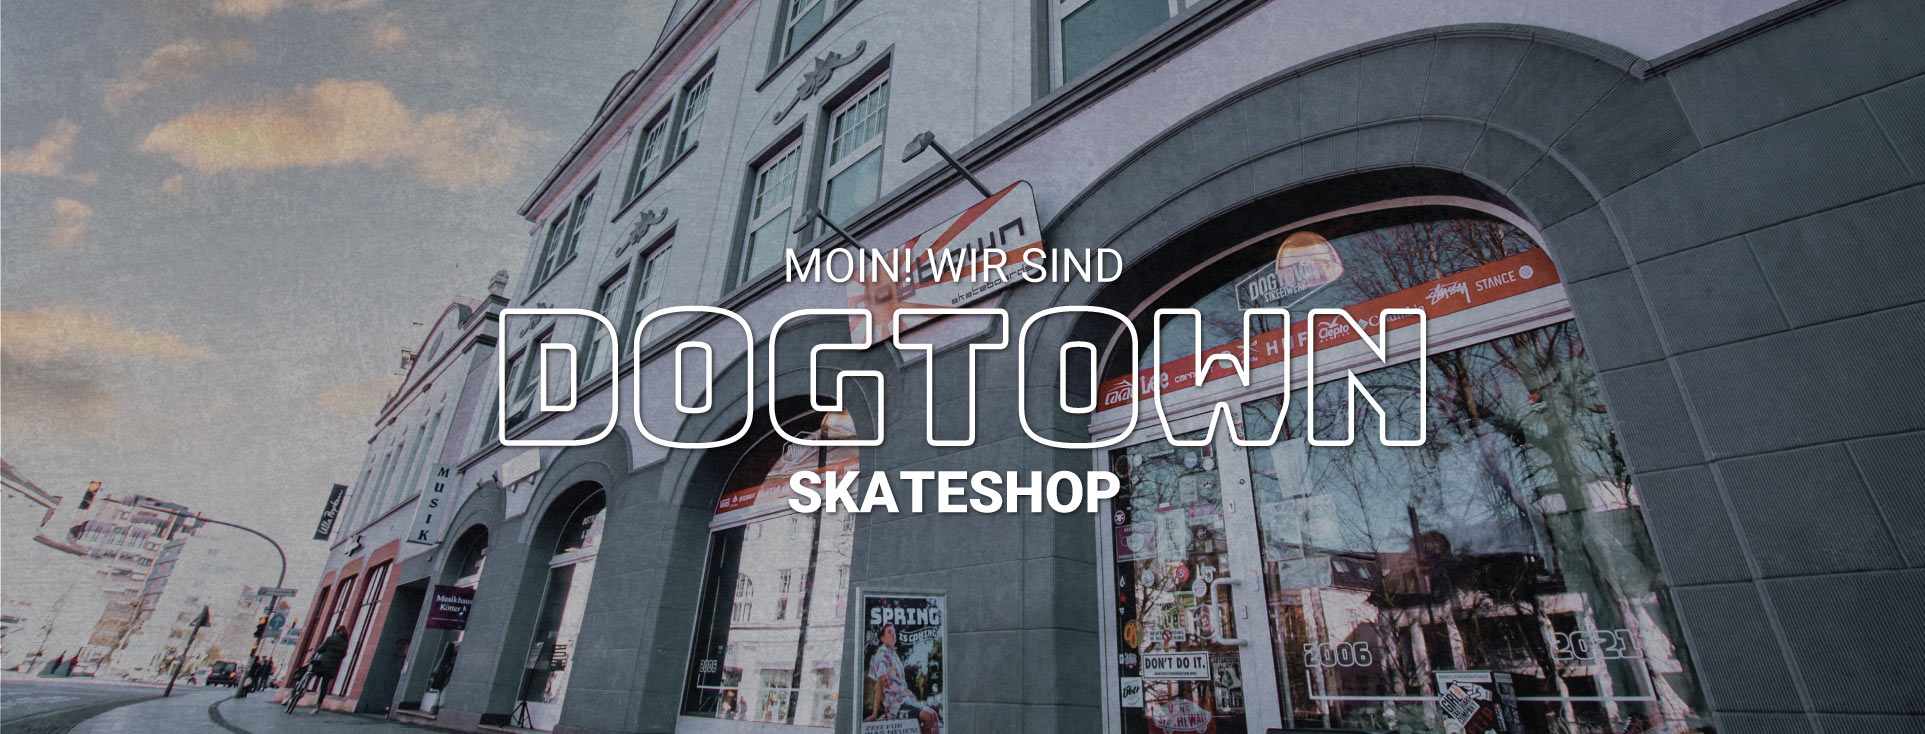 Dogtown-Skateshop Oldenburg